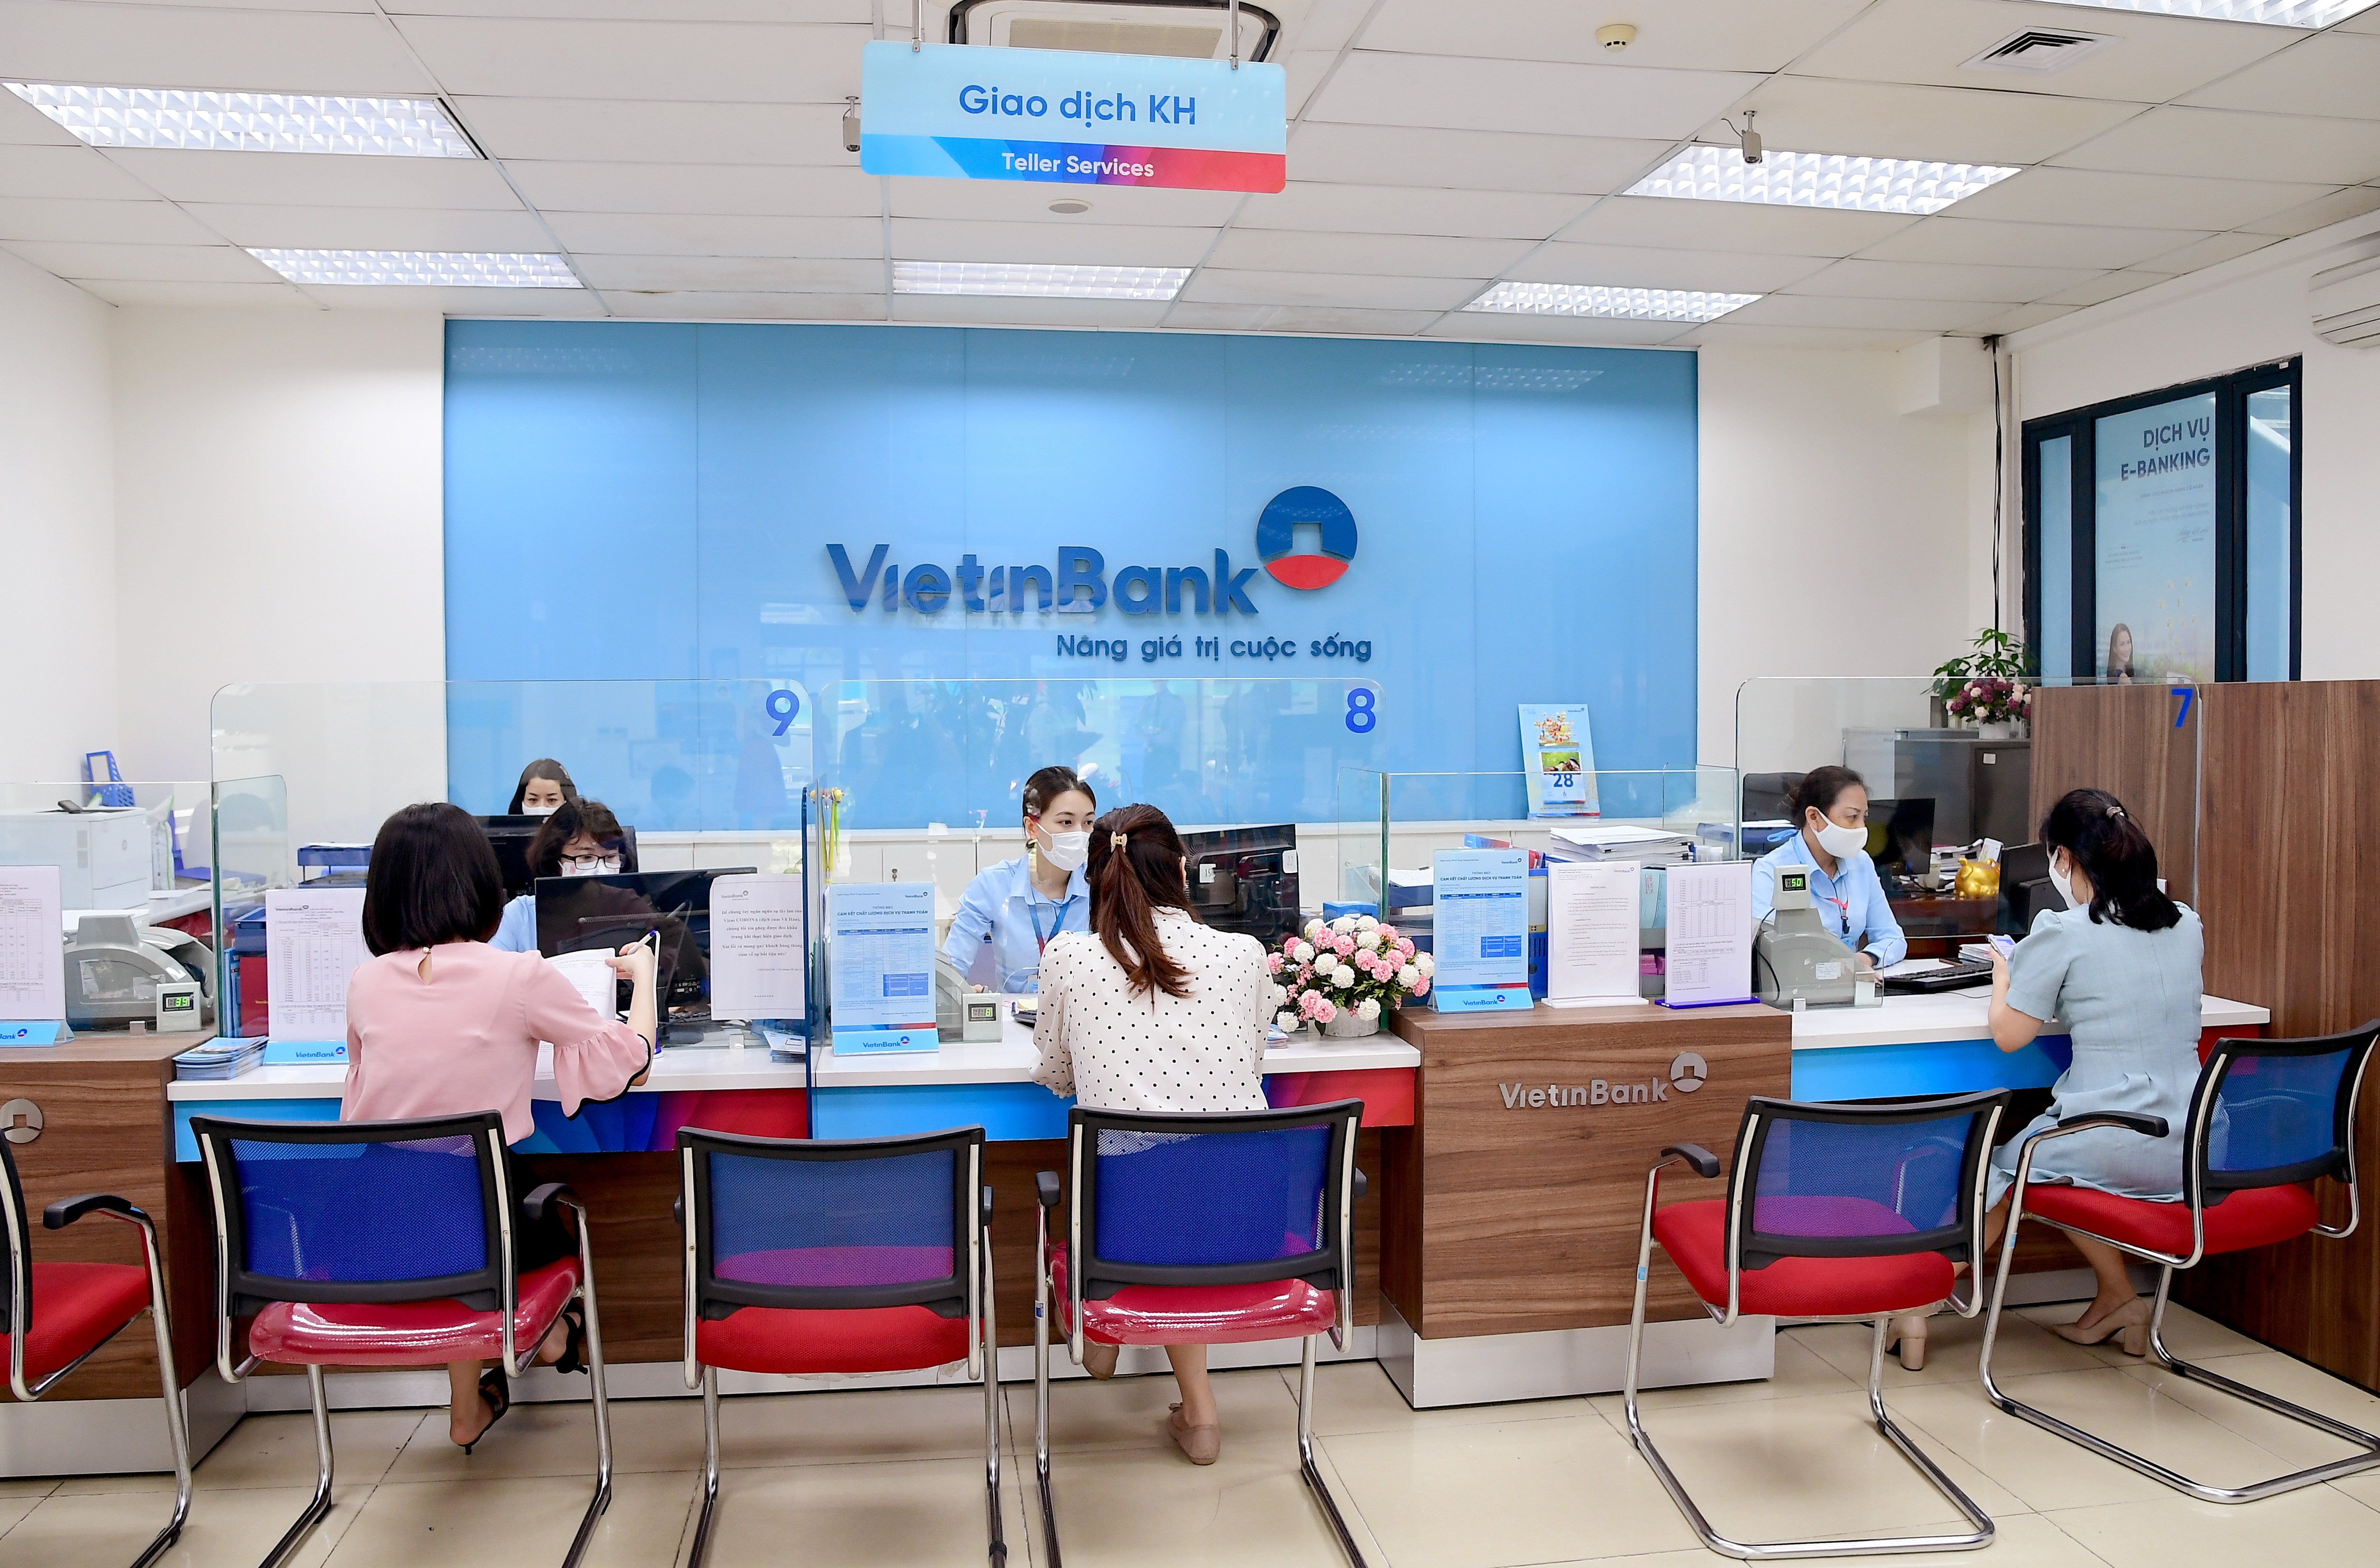 vietinbank phat hanh thanh cong 7000 ty dong trai phieu ra cong chung dot 1 nam 2020